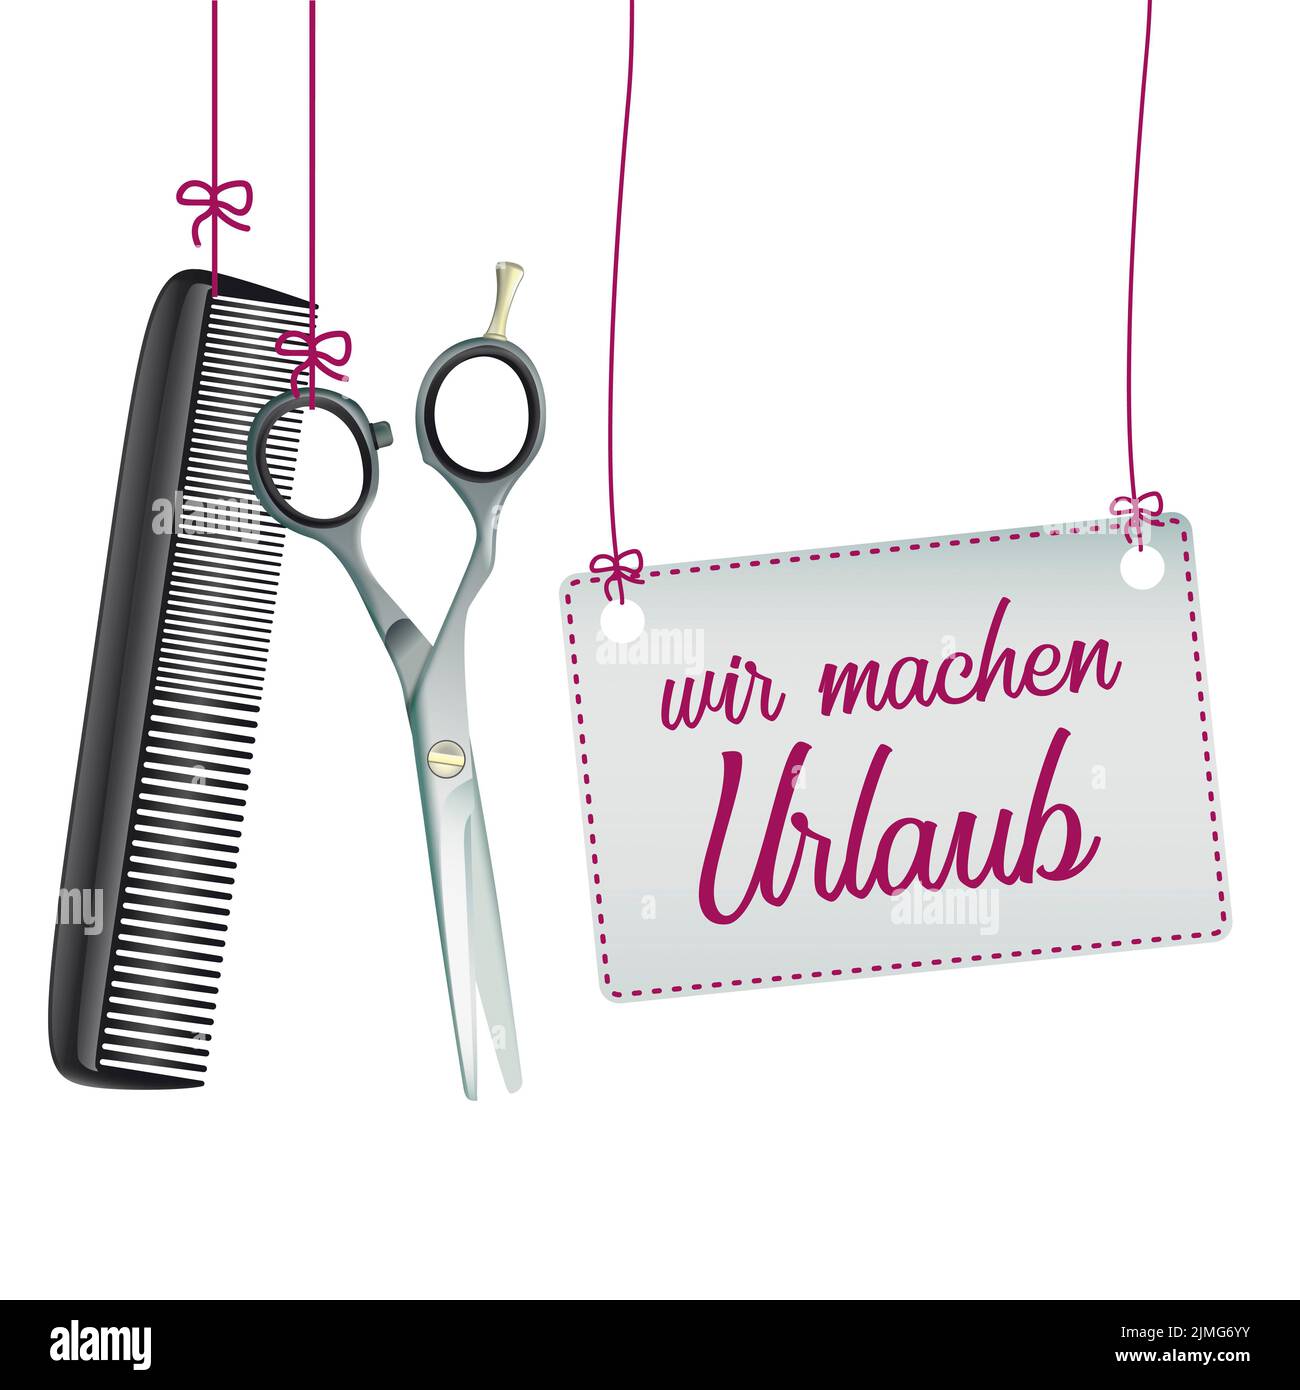 Hanging Scissors Comb Urlaub Banner Stock Photo